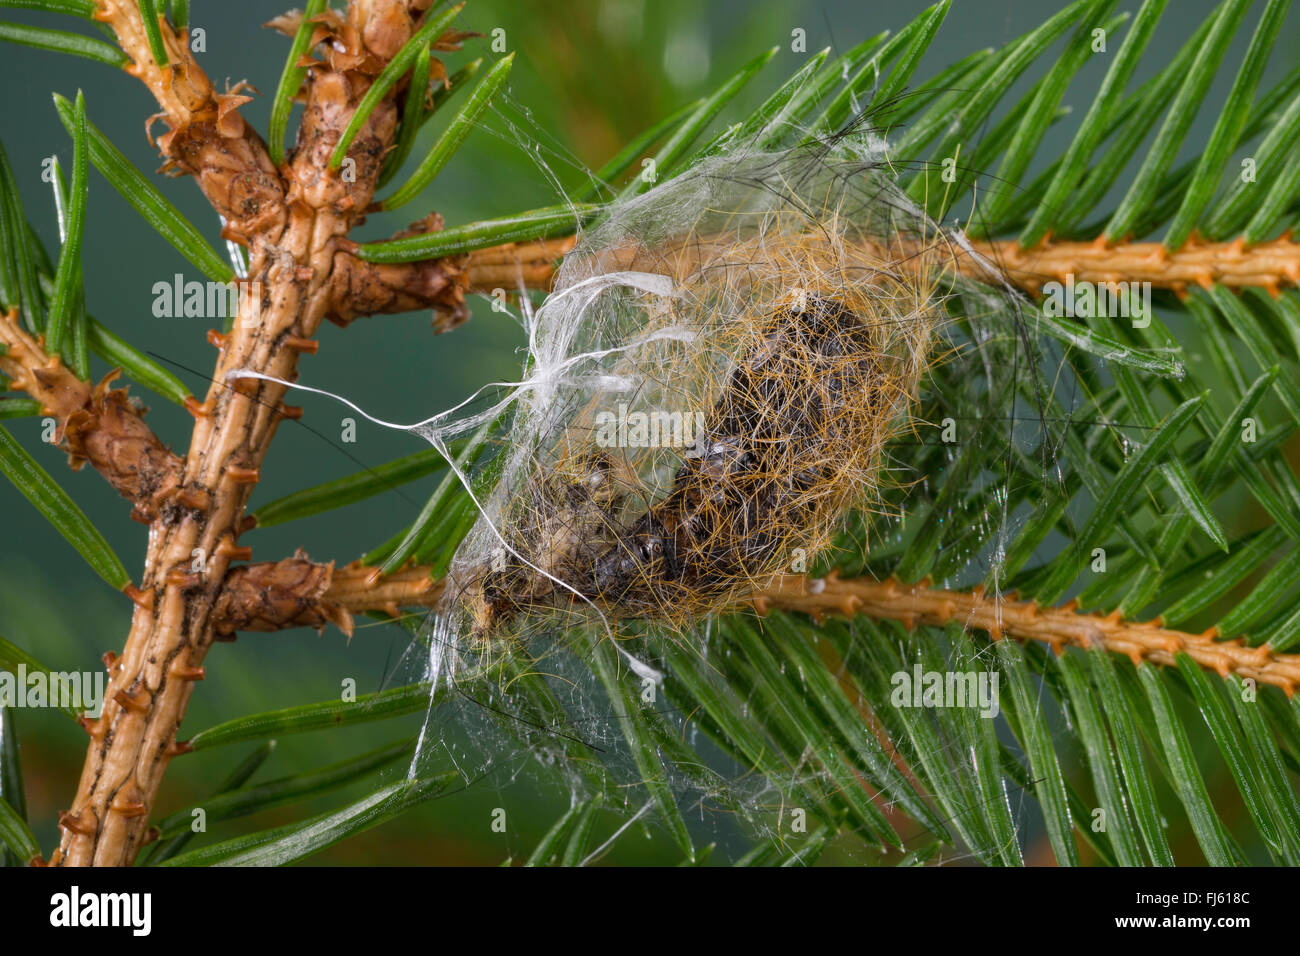 Tannen-Streckfuss (Calliteara abietis), pupa in cocoon, Germany Stock Photo